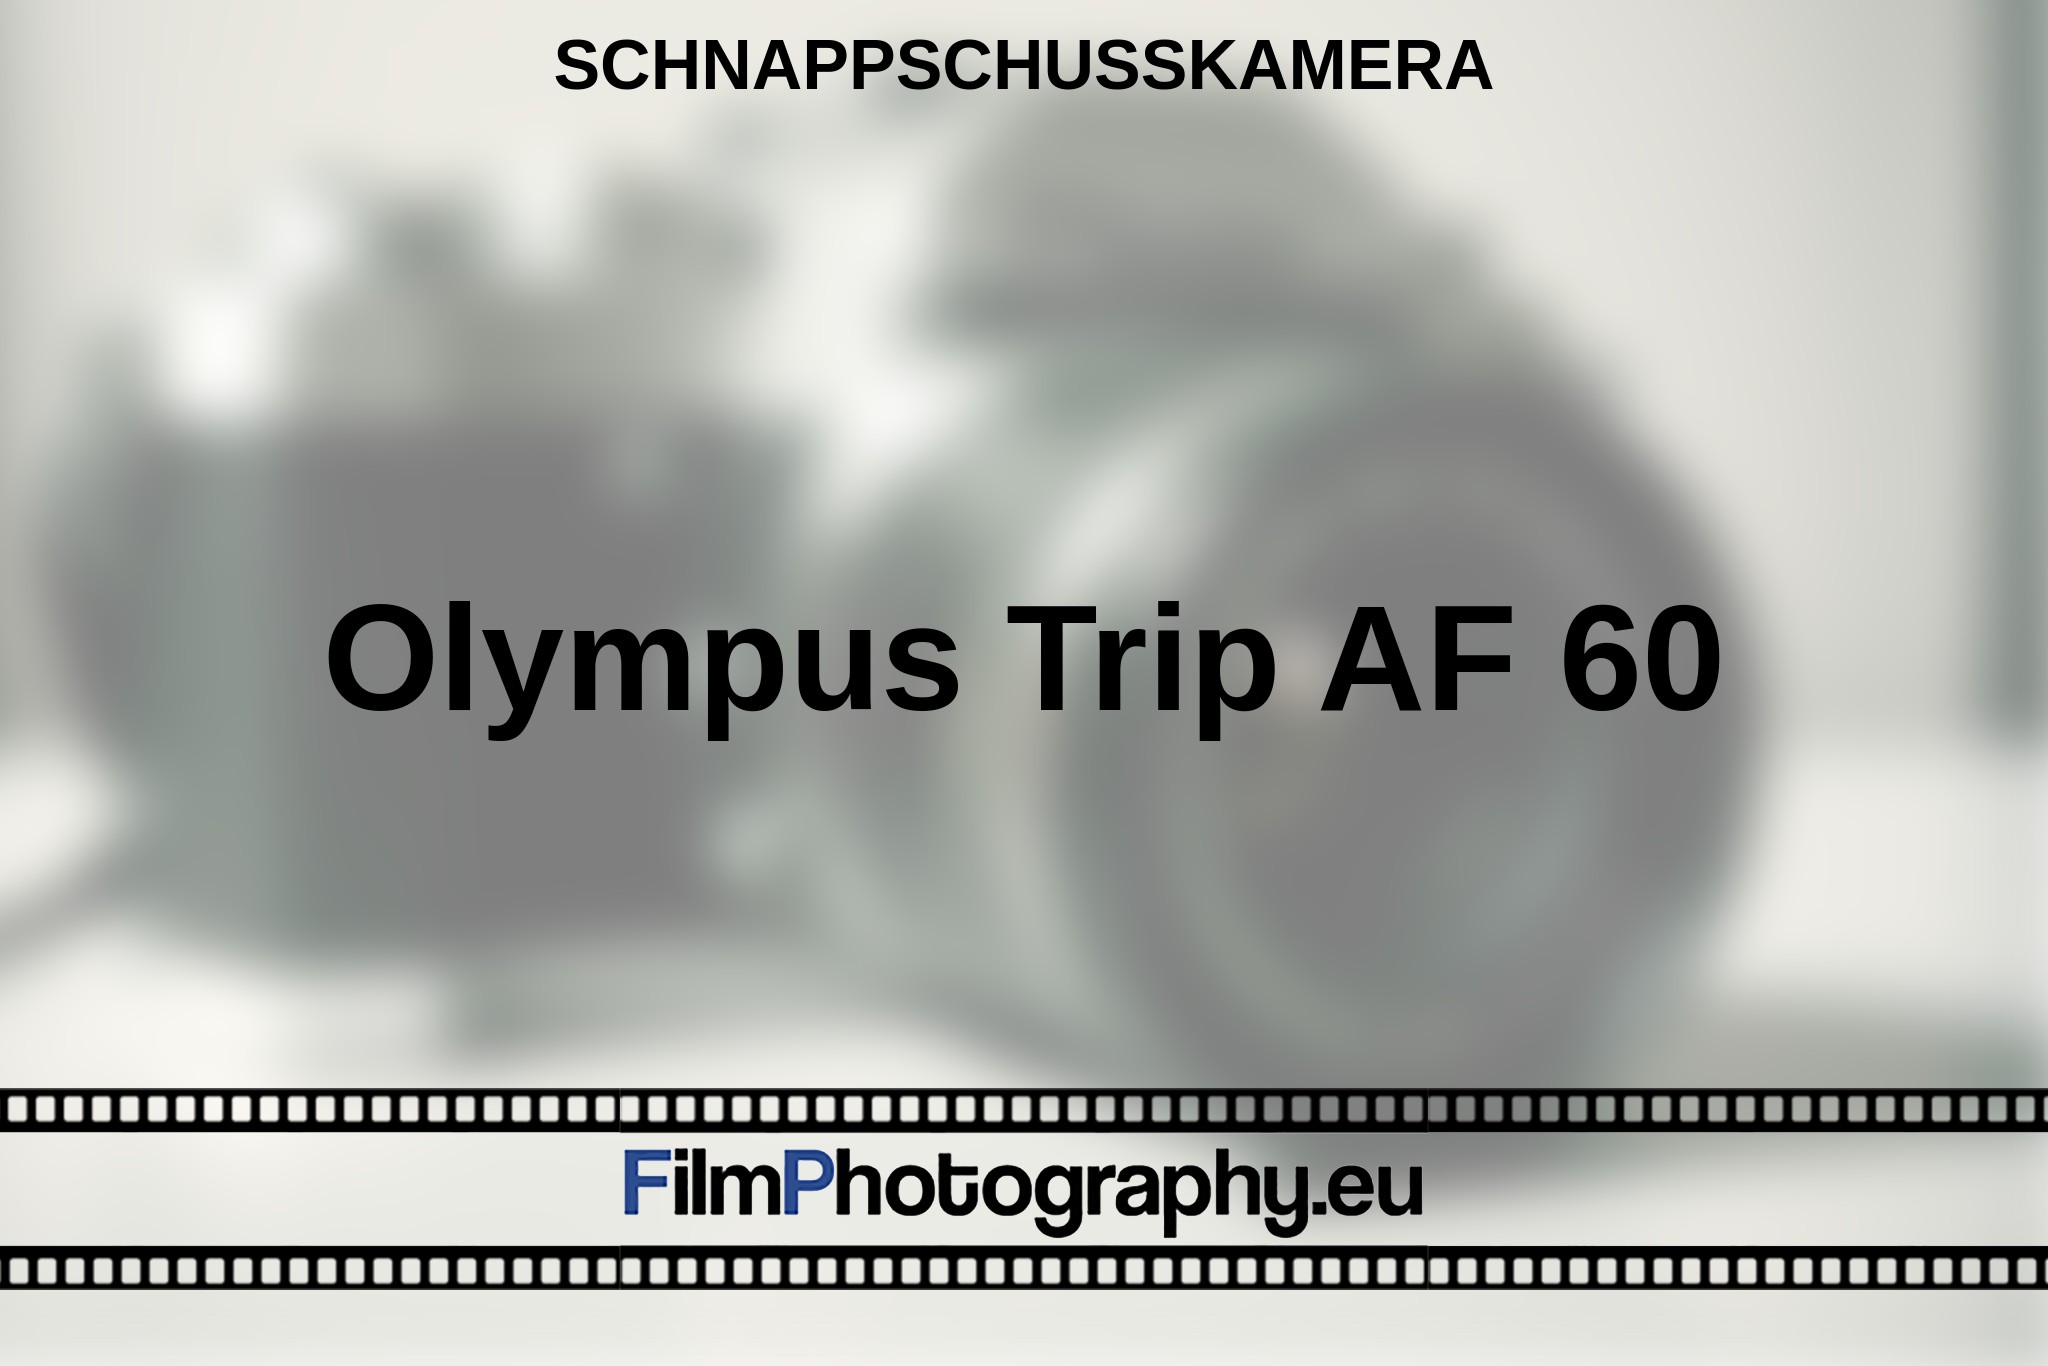 olympus-trip-af-60-schnappschusskamera-bnv.jpg